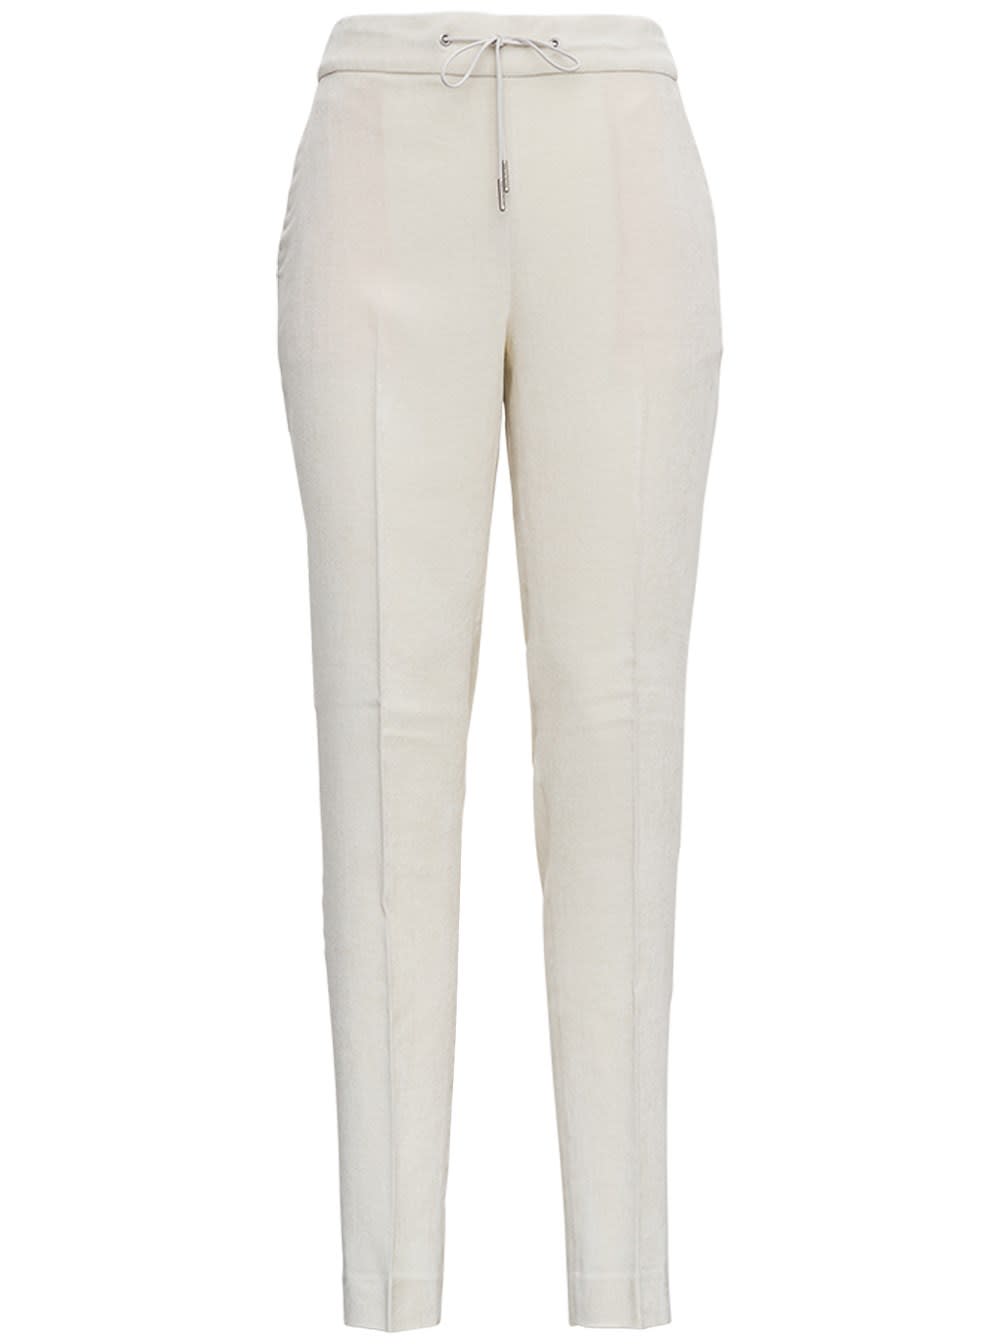 Fabiana Filippi White Wool Blend Pants